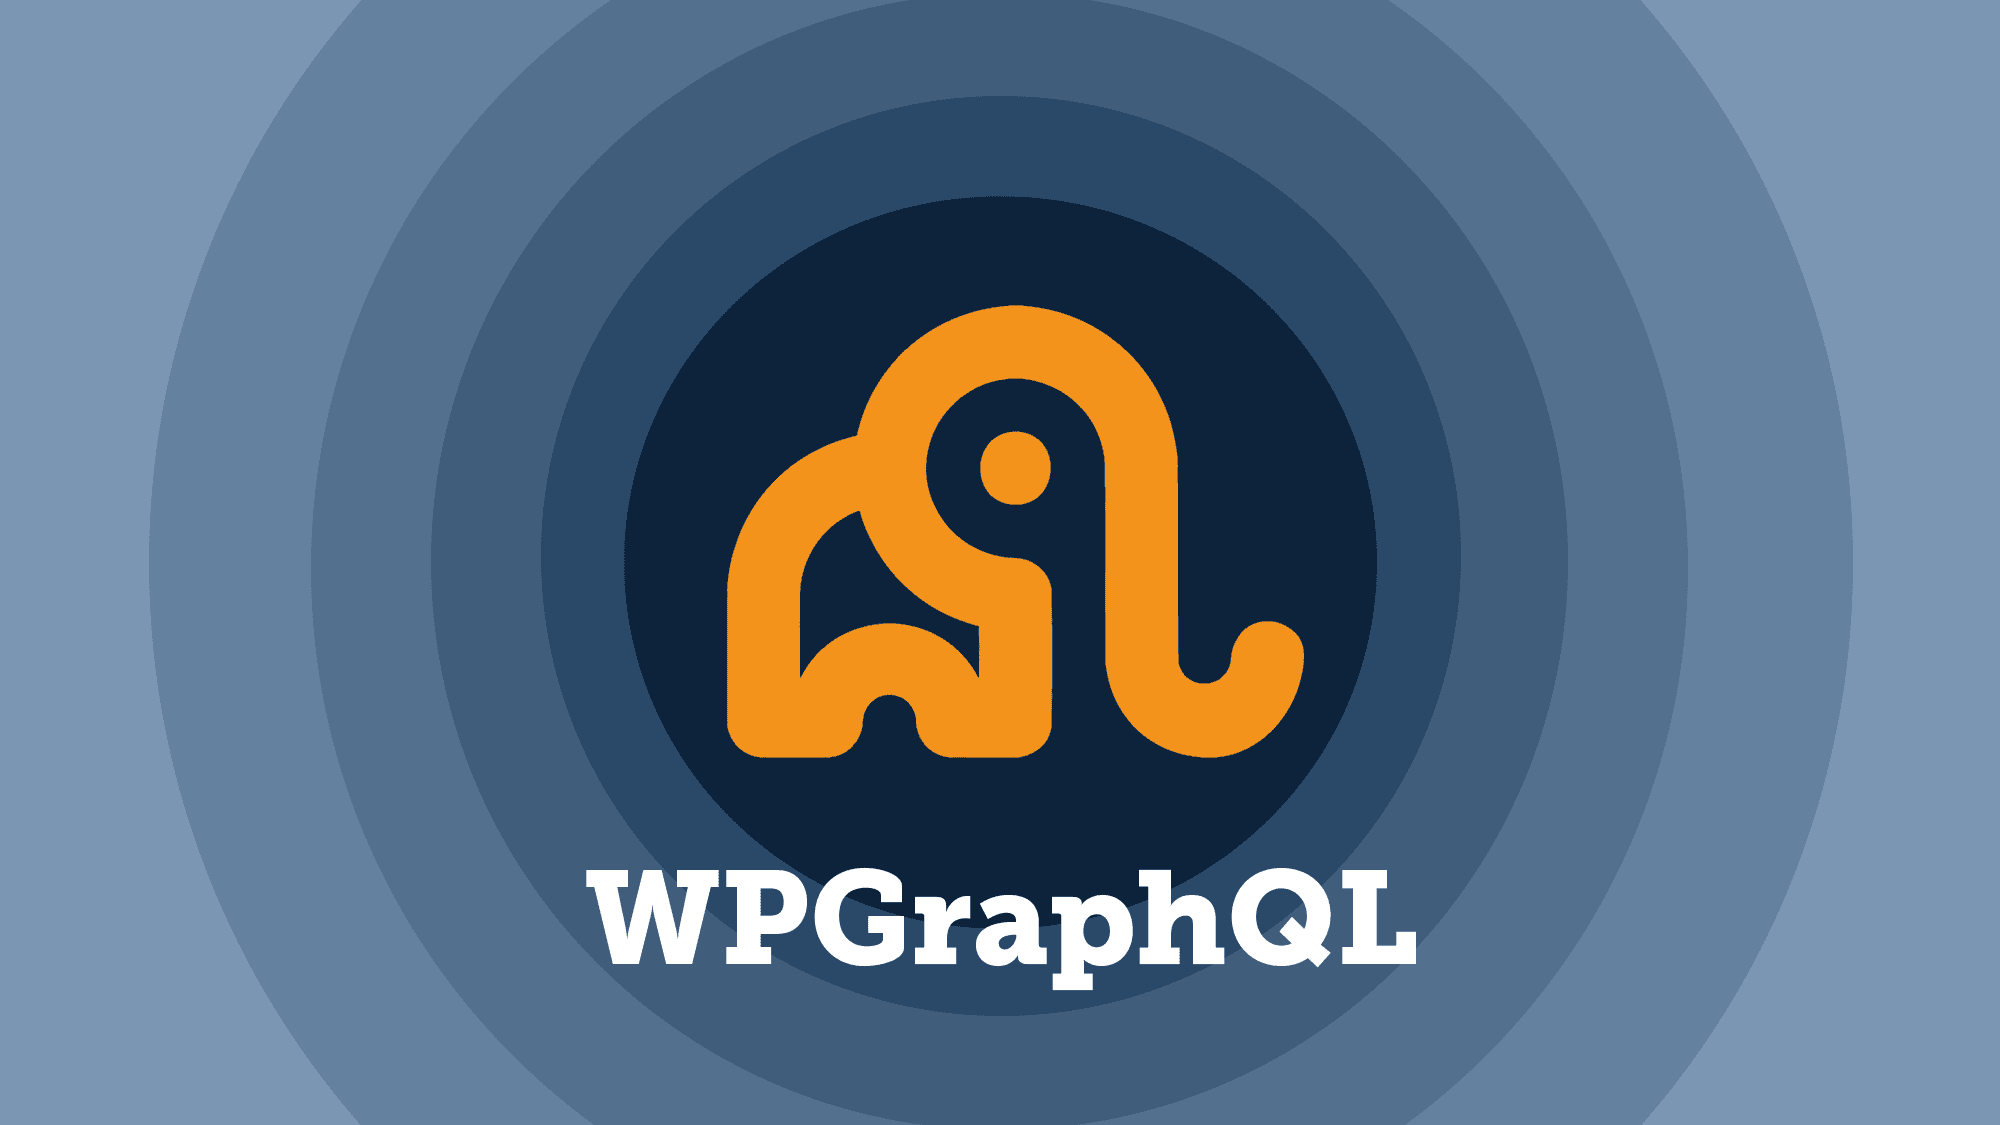 WPGraphQLで全文検索を行う方法